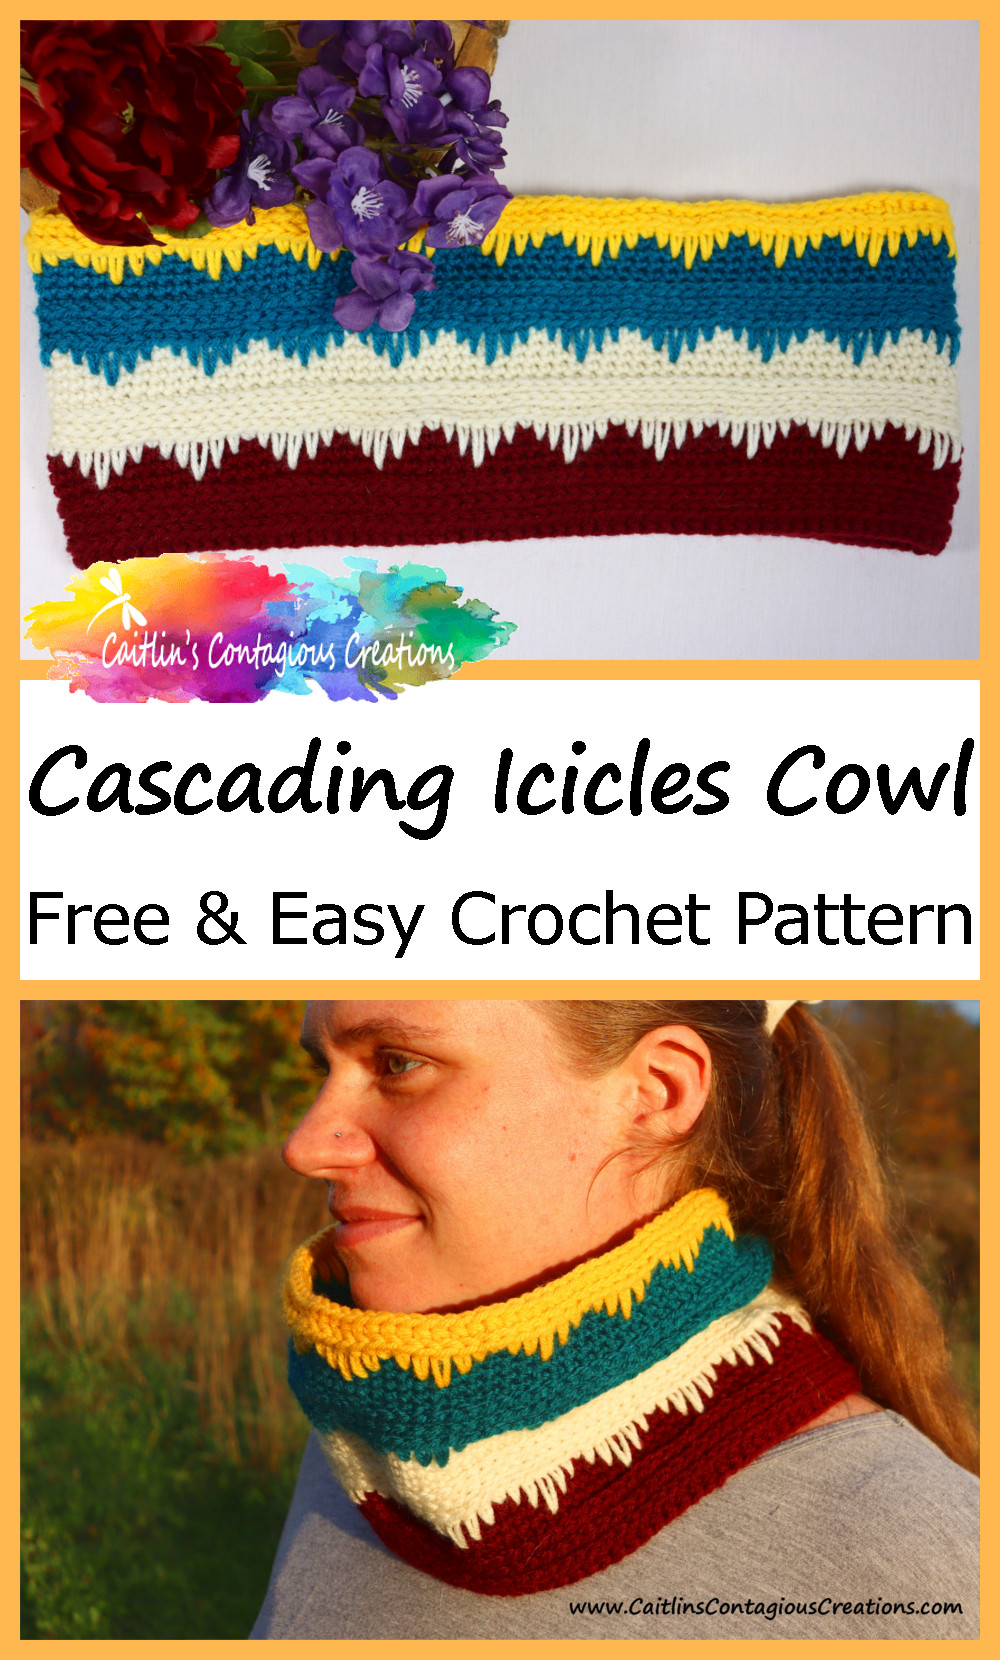 cascading icicles cowl crochet pattern pinterest image